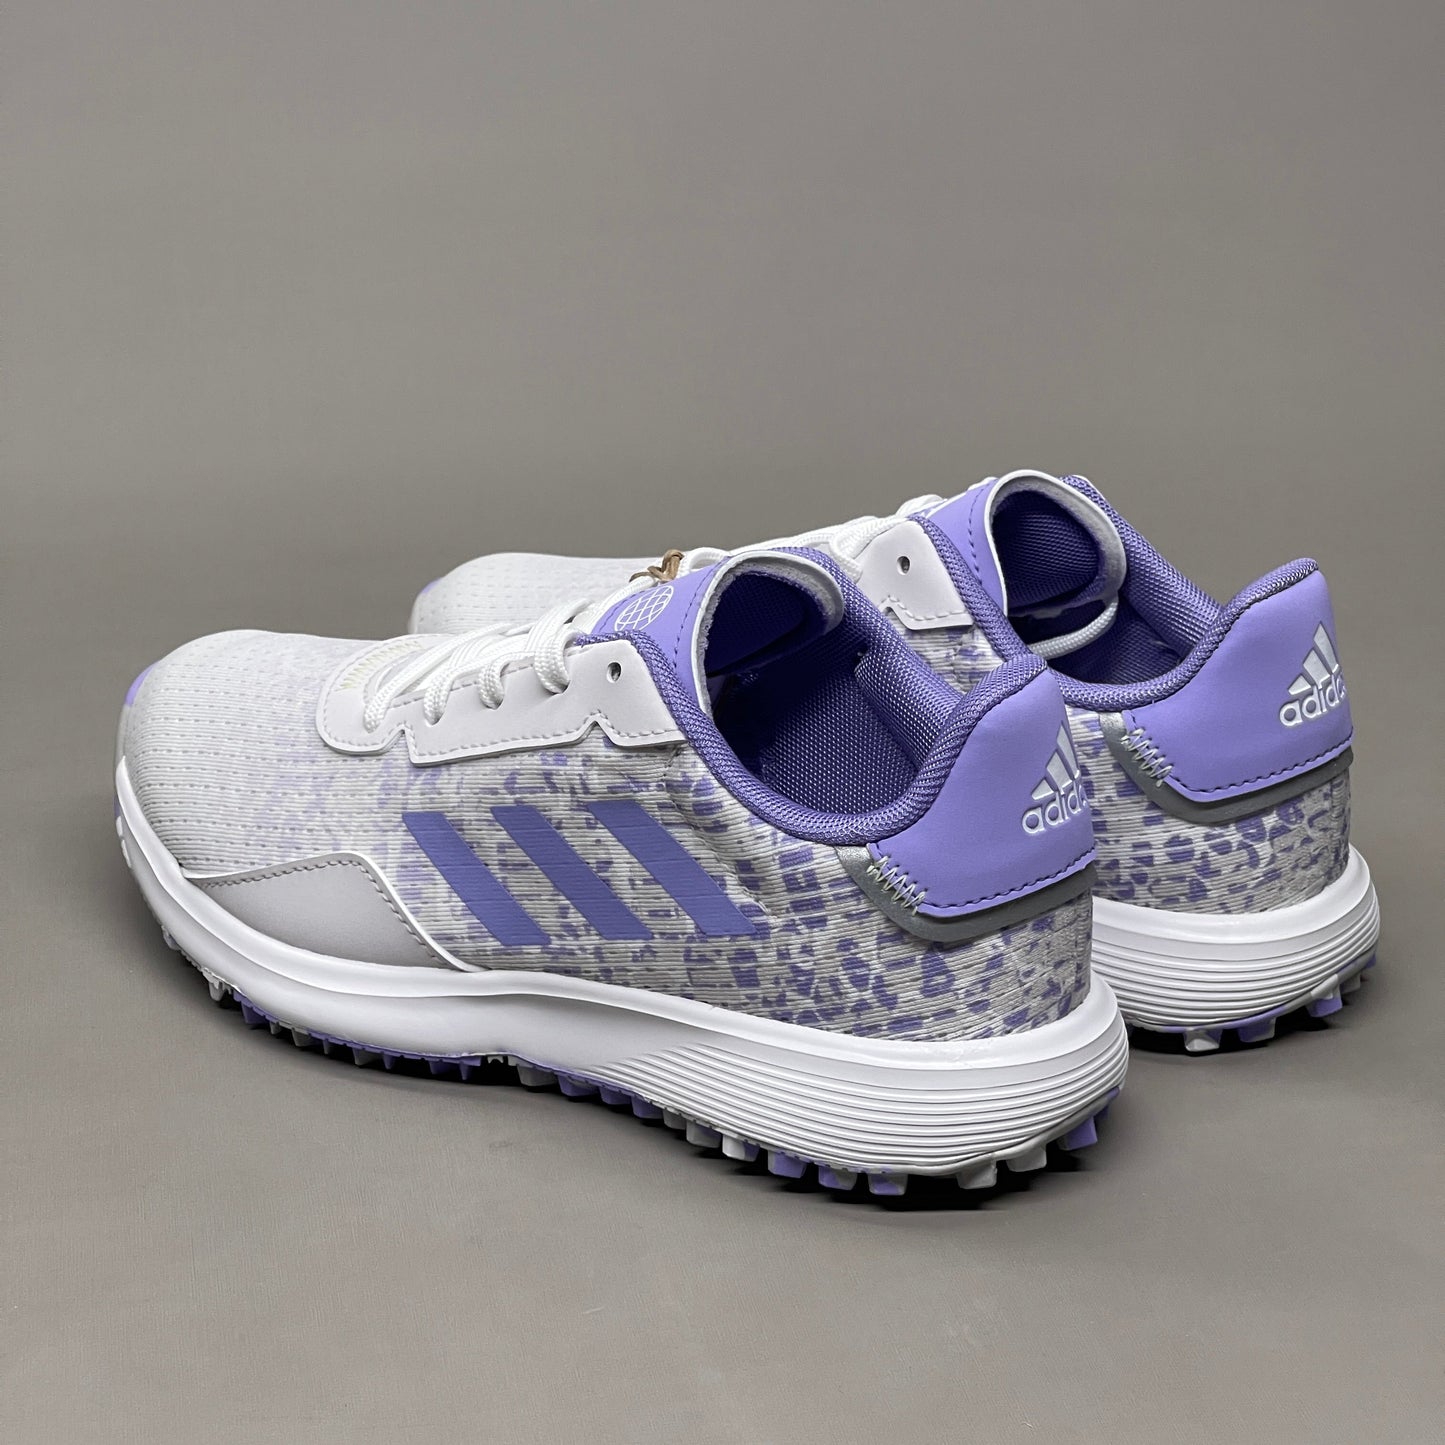 ADIDAS Golf Shoes JR S2G SL Waterproof Youth Sz 6 White / Lime / Purple GV9787 (New)